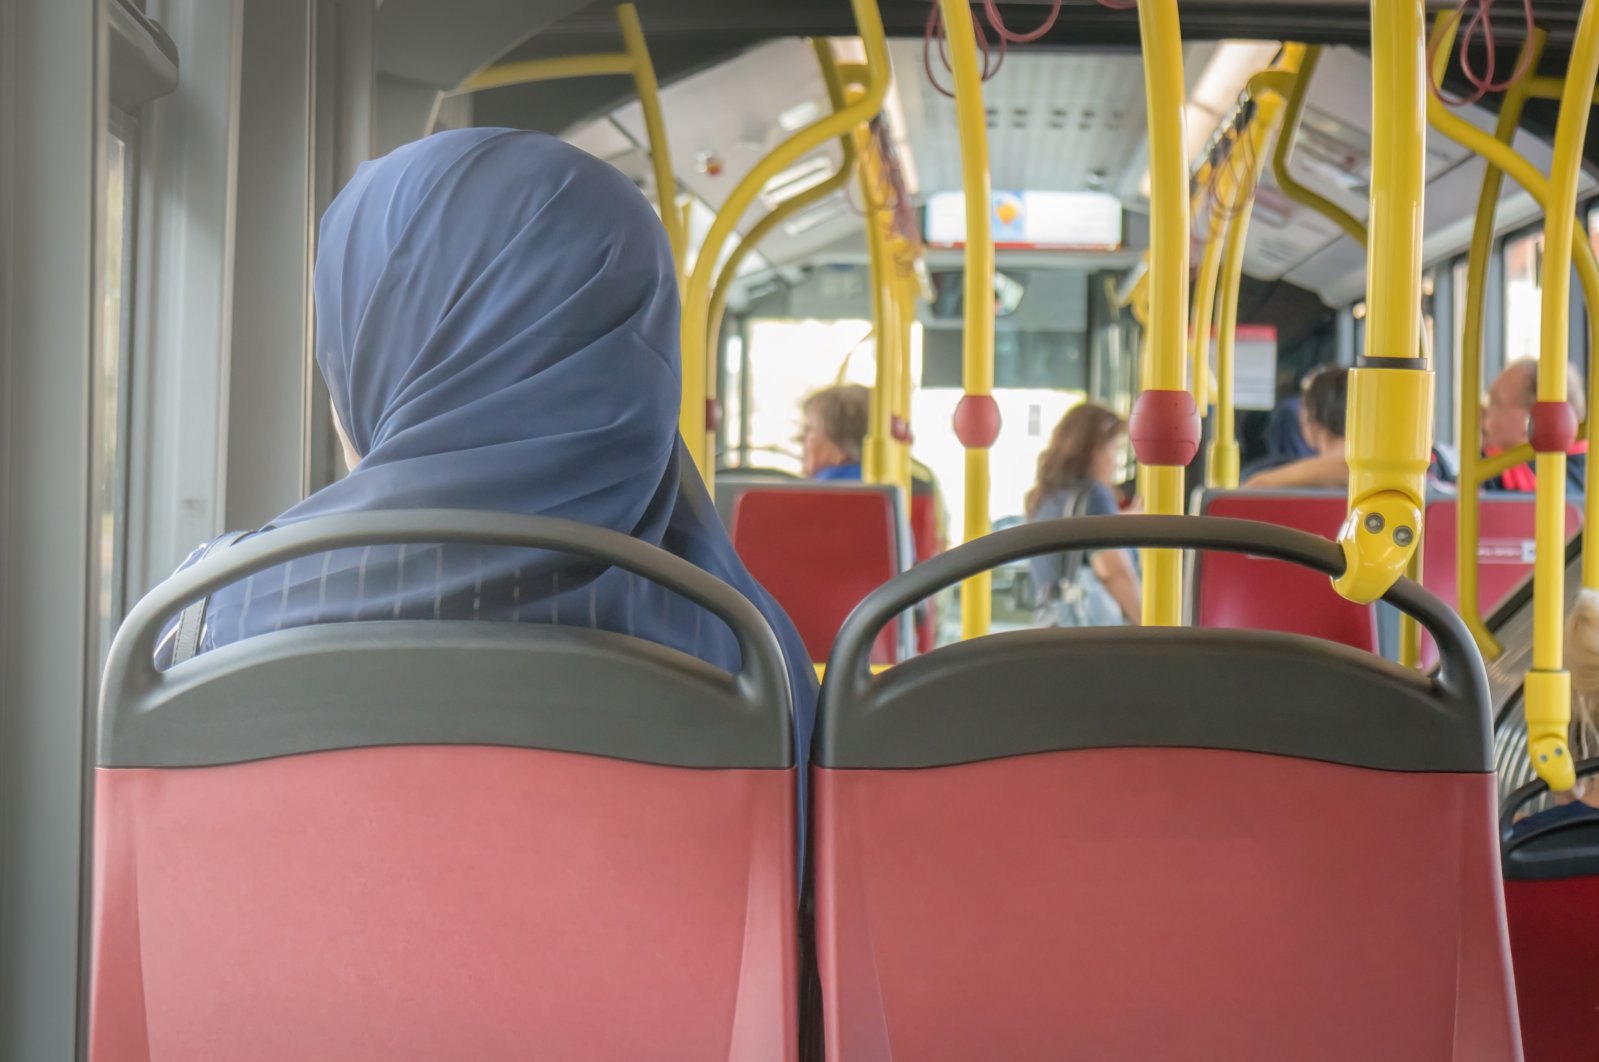 A Muslim in a headscarf rides a bus in Vienna, Austria, Aug. .8 2017. (Shutterstock Photo)